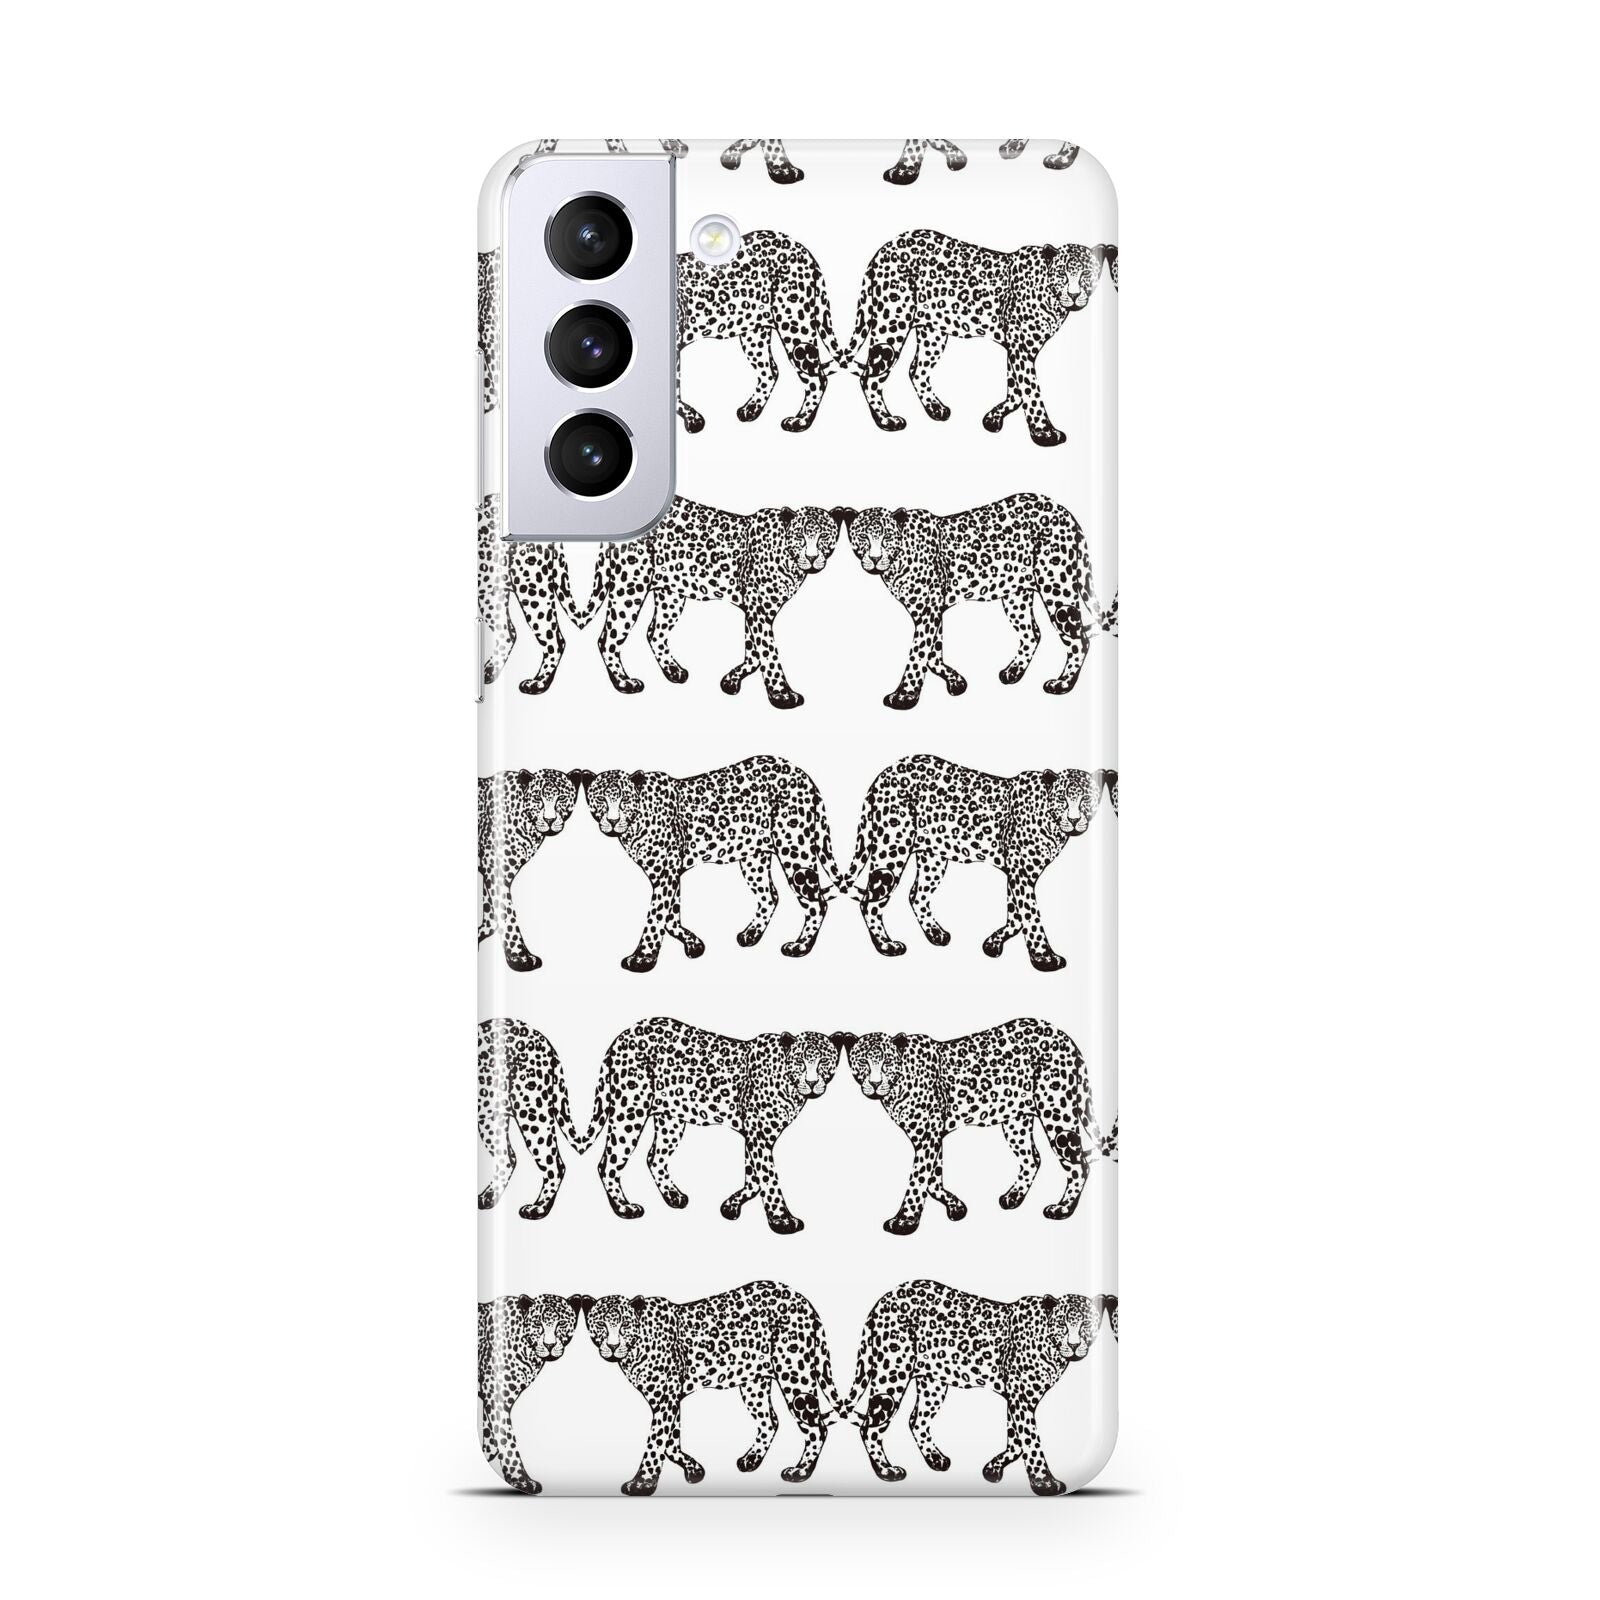 Monochrome Mirrored Leopard Print Samsung S21 Plus Phone Case